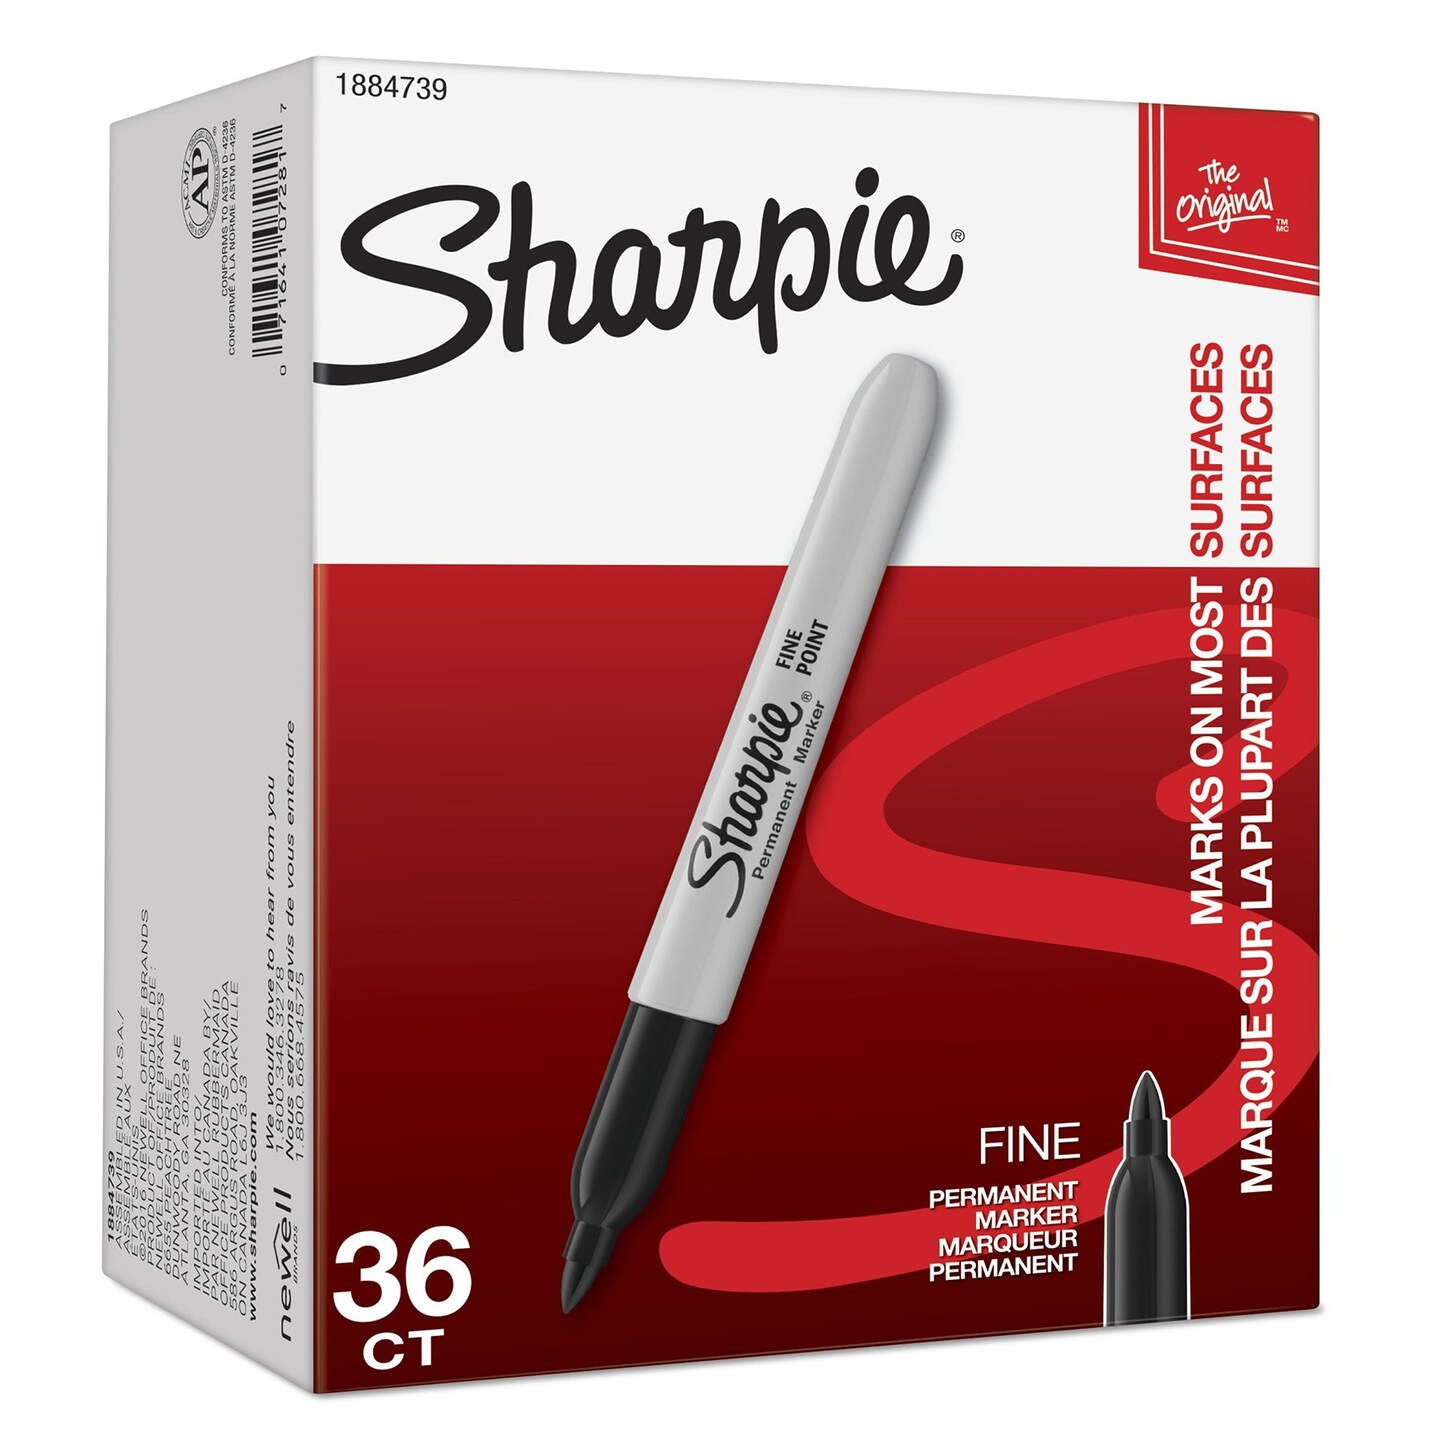 Sharpie Felt Tip Pens, Medium Point, Black, 6 Count